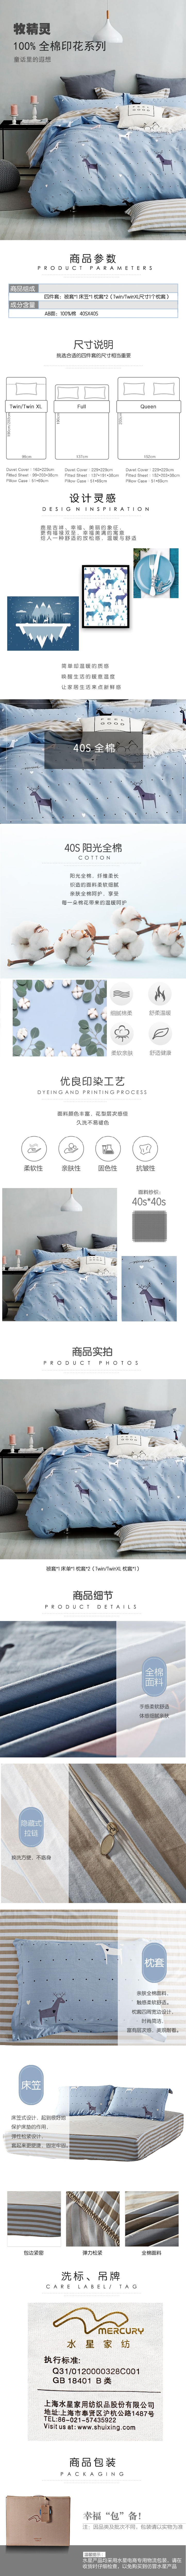 100% Cotton Blue Deer Full Size 4 Piece Bedding set